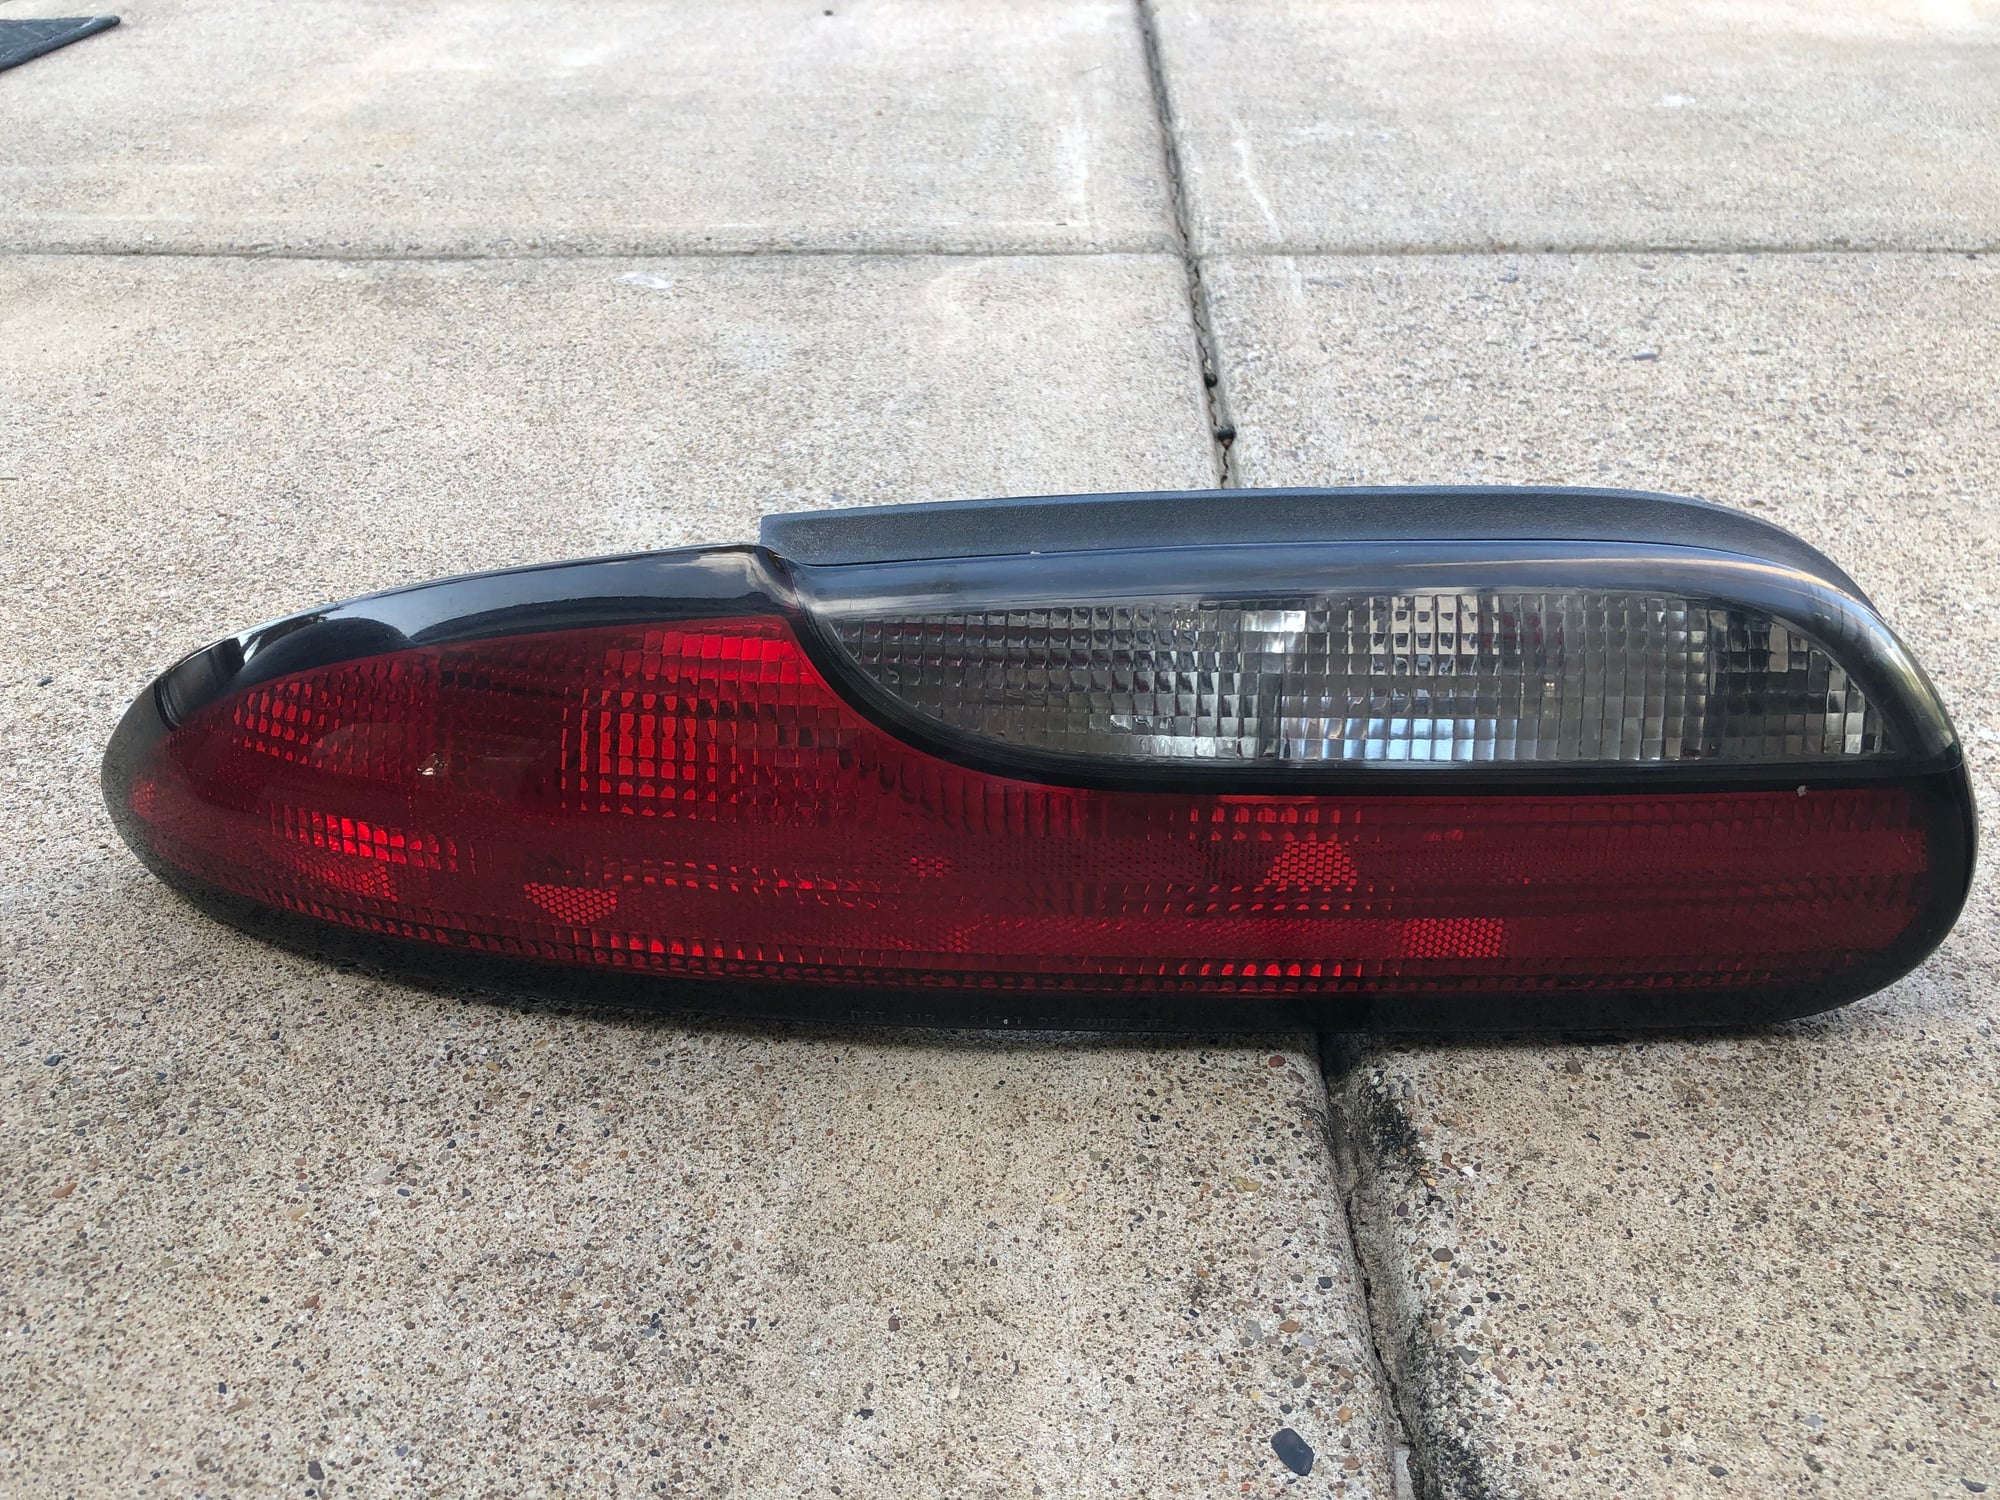  - LT1 93-97 Camaro Tail Lights - Harlingen, TX 78550, United States